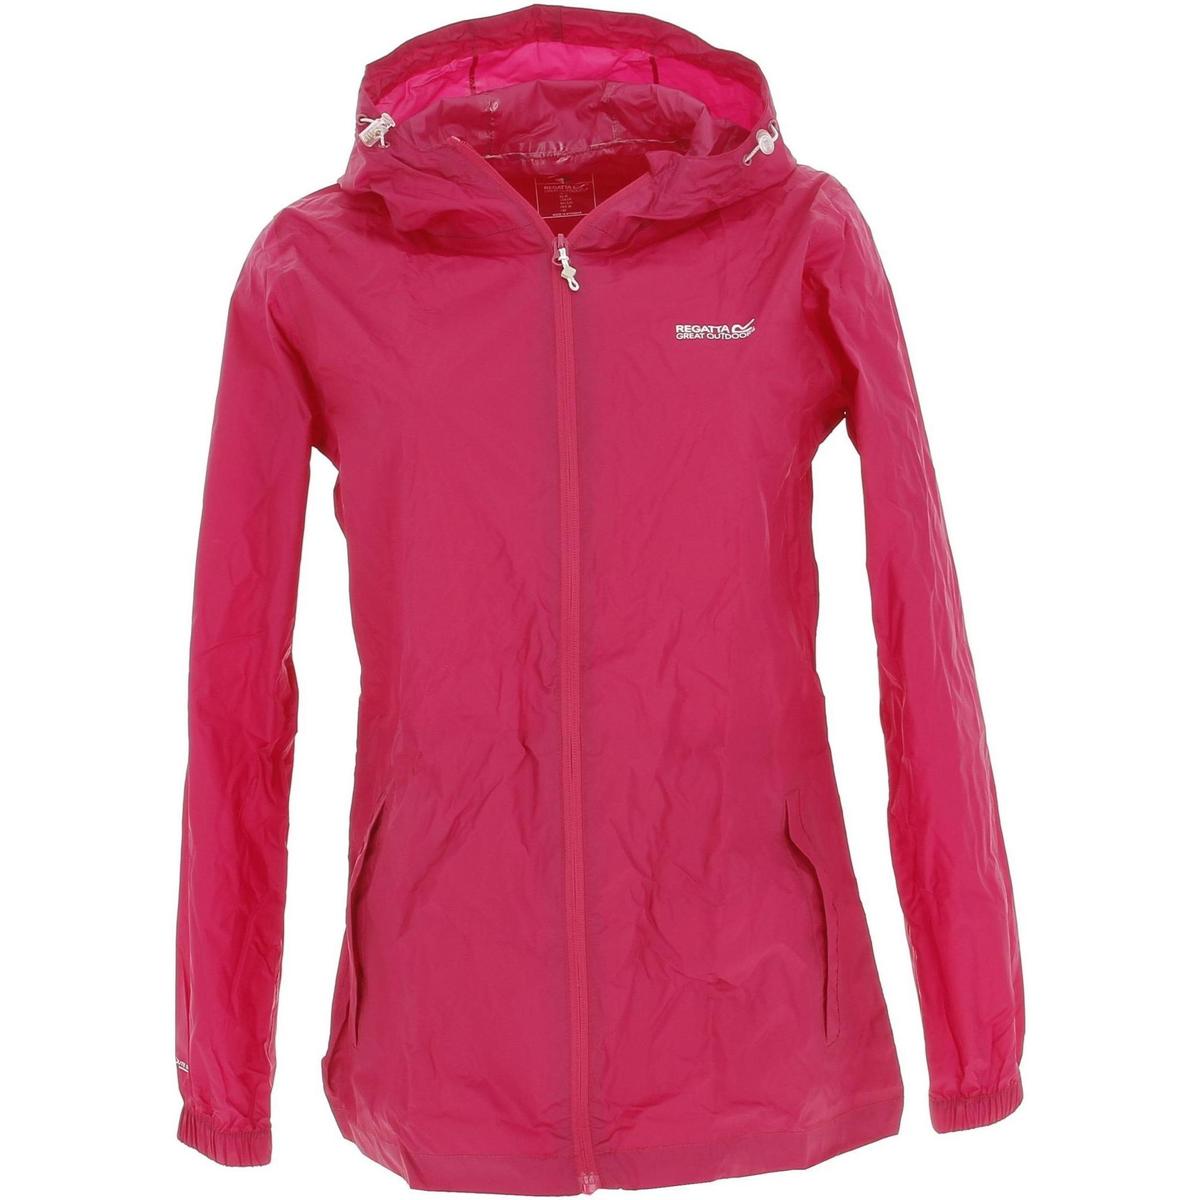 Regatta Rose Womenxs pack-it jacket iii berry pink G8OY1mCE